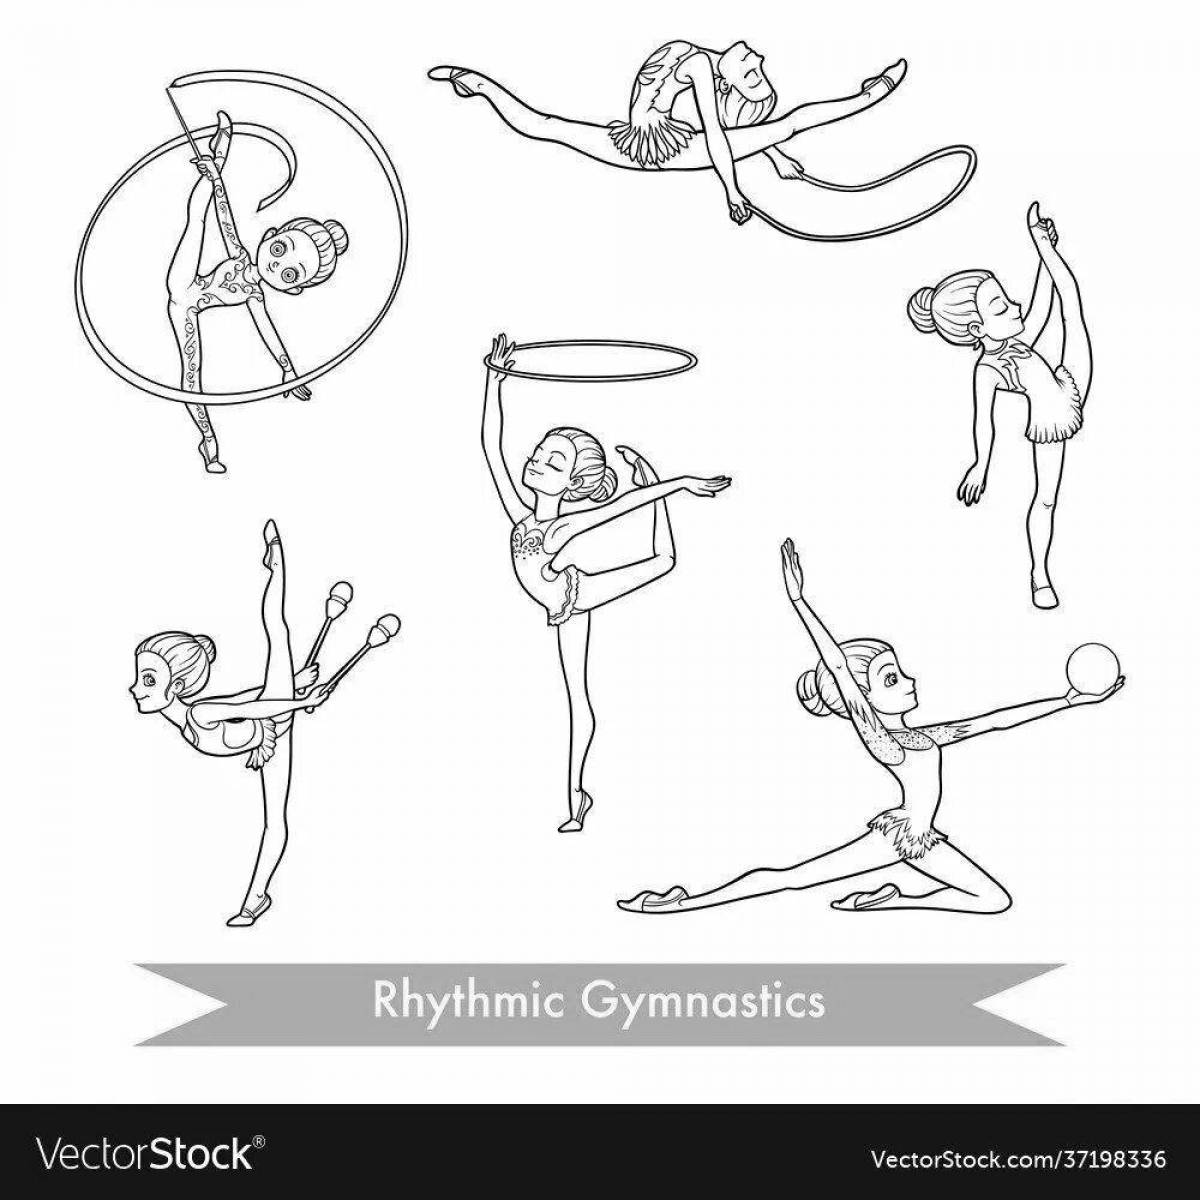 Dynamic gymnast with hoop